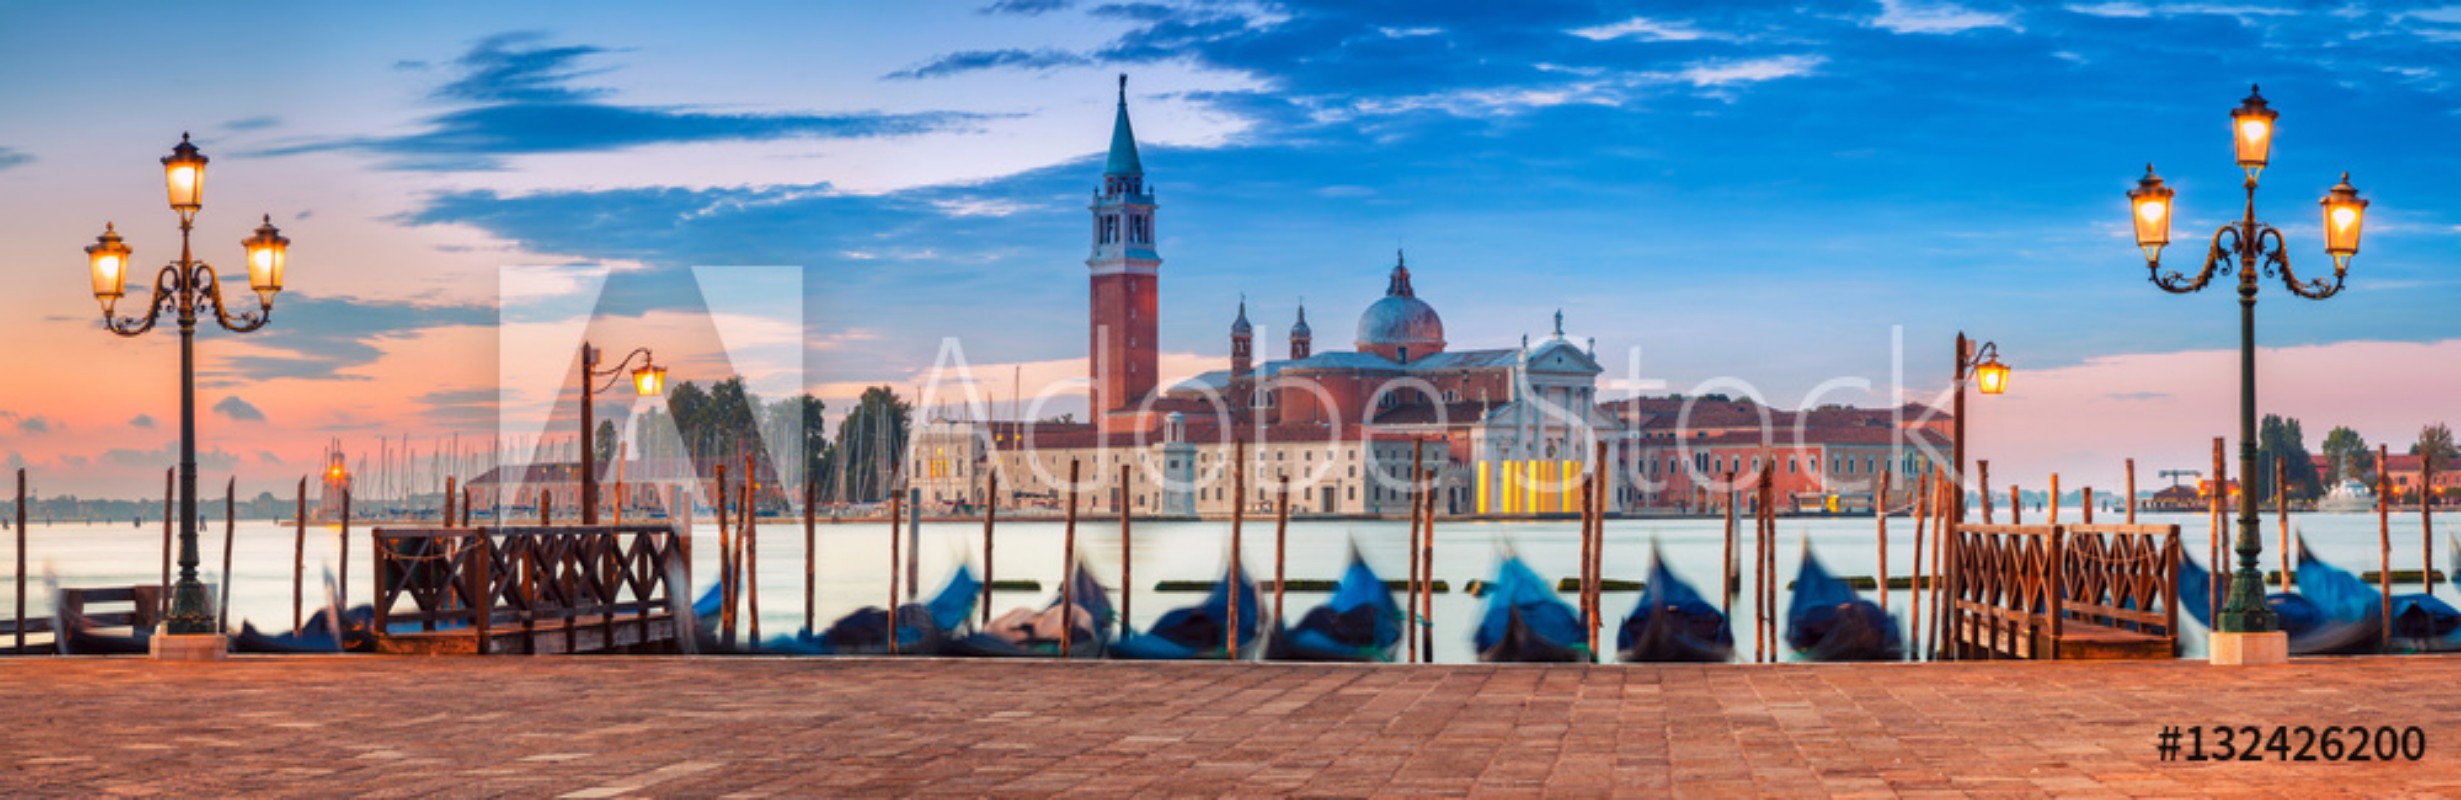 Image de Venice Panorama Panoramic image of Venice Italy during sunrise